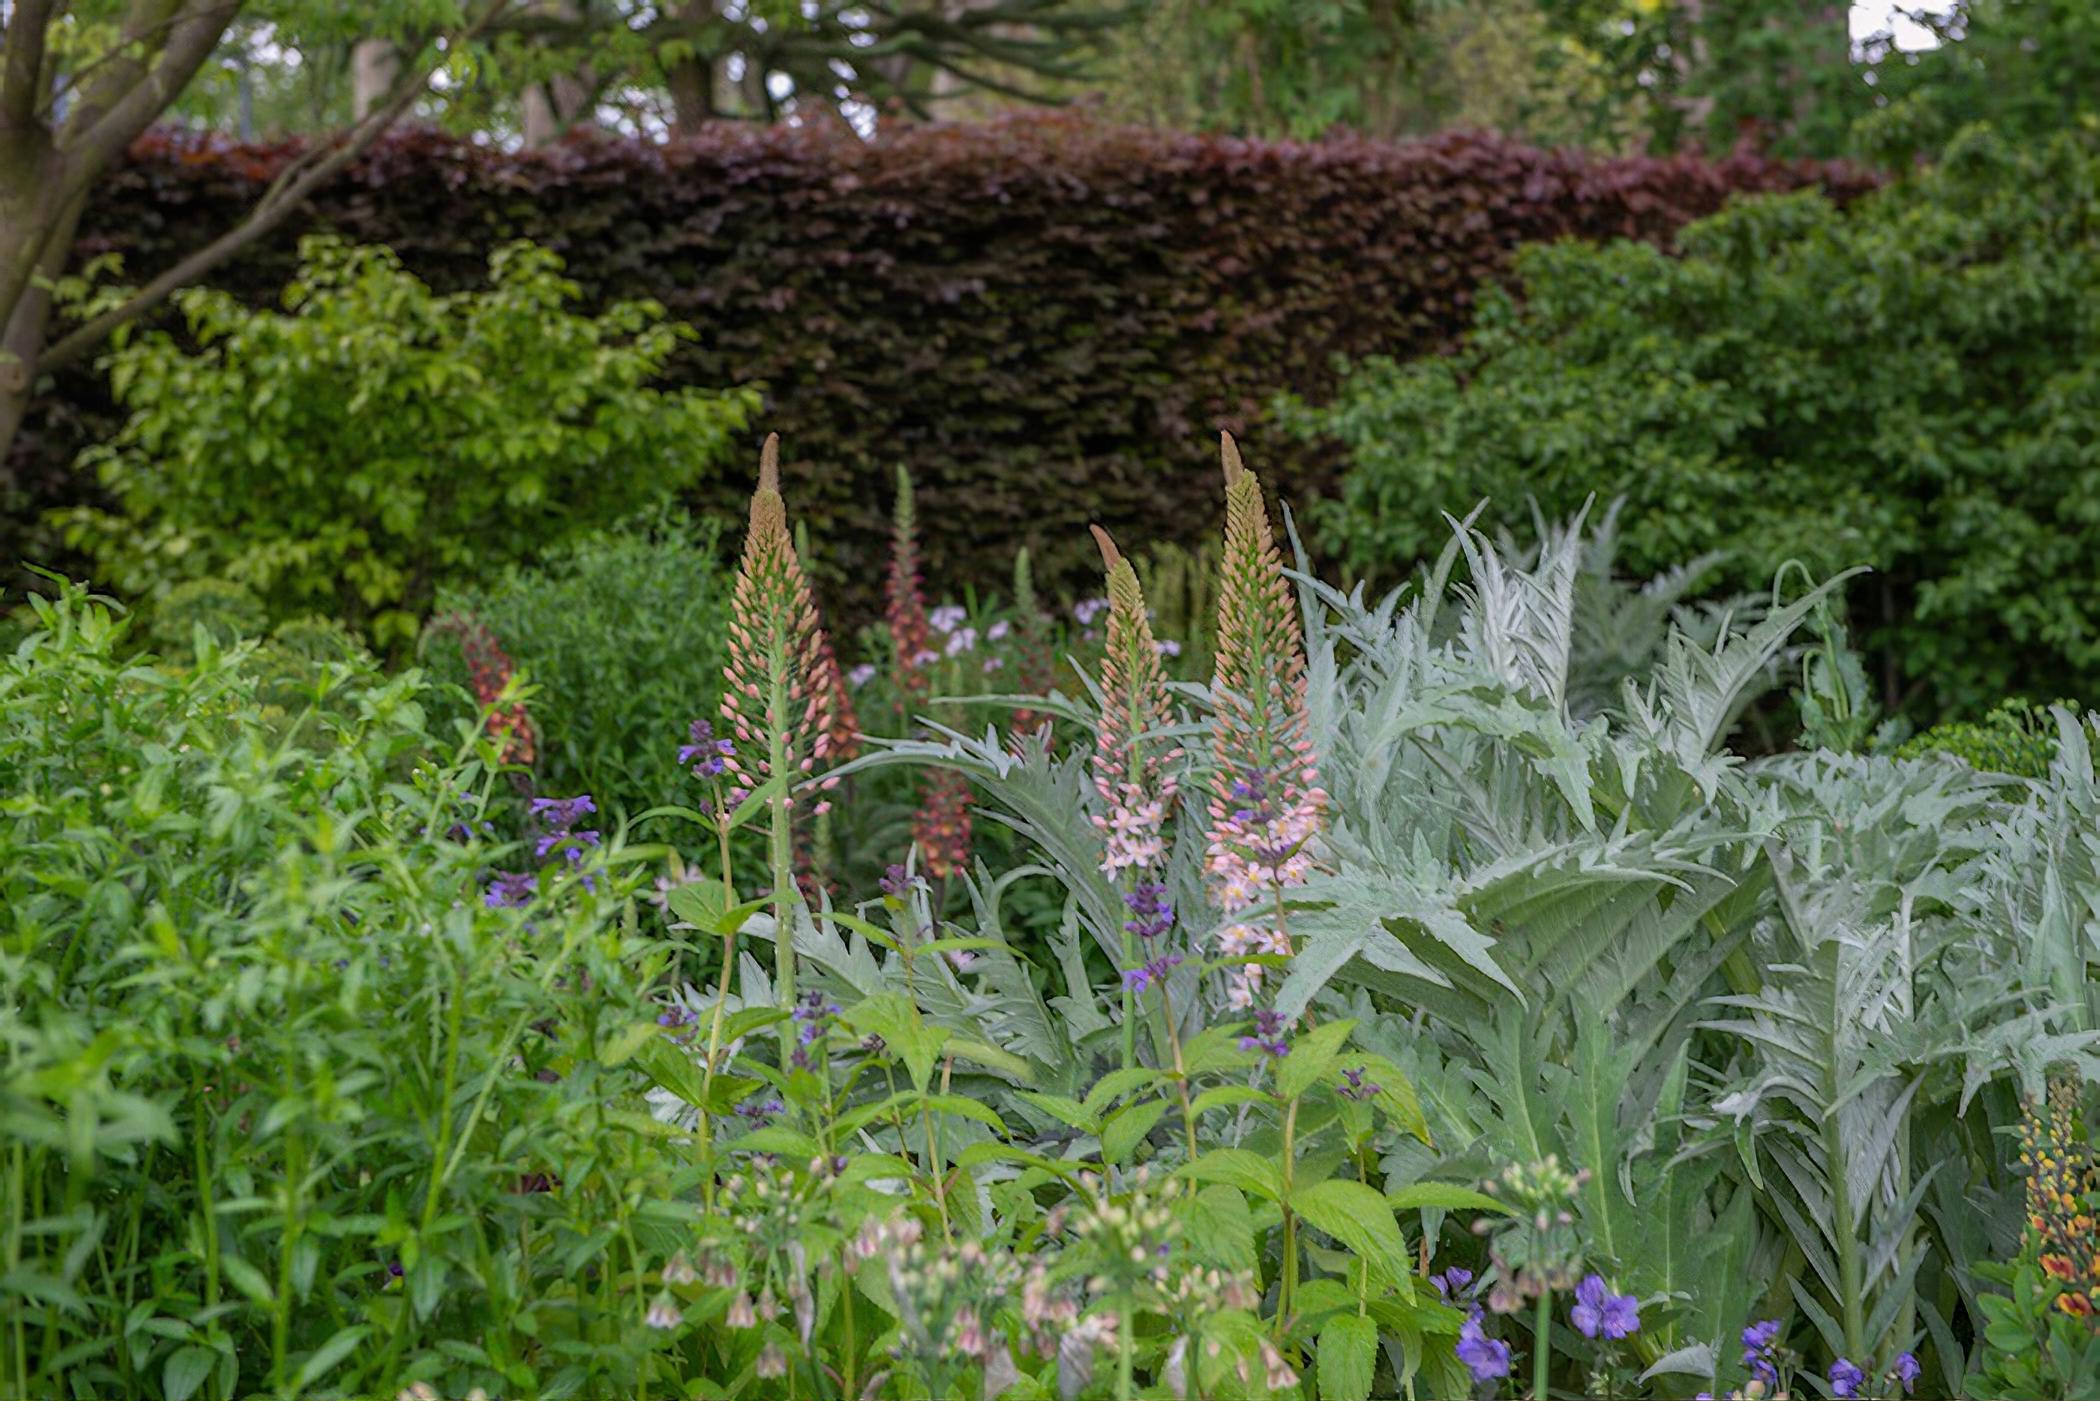 The Morgan Stanley Garden by garden designer Chris Beardshaw Chelsea Flower Show 2019